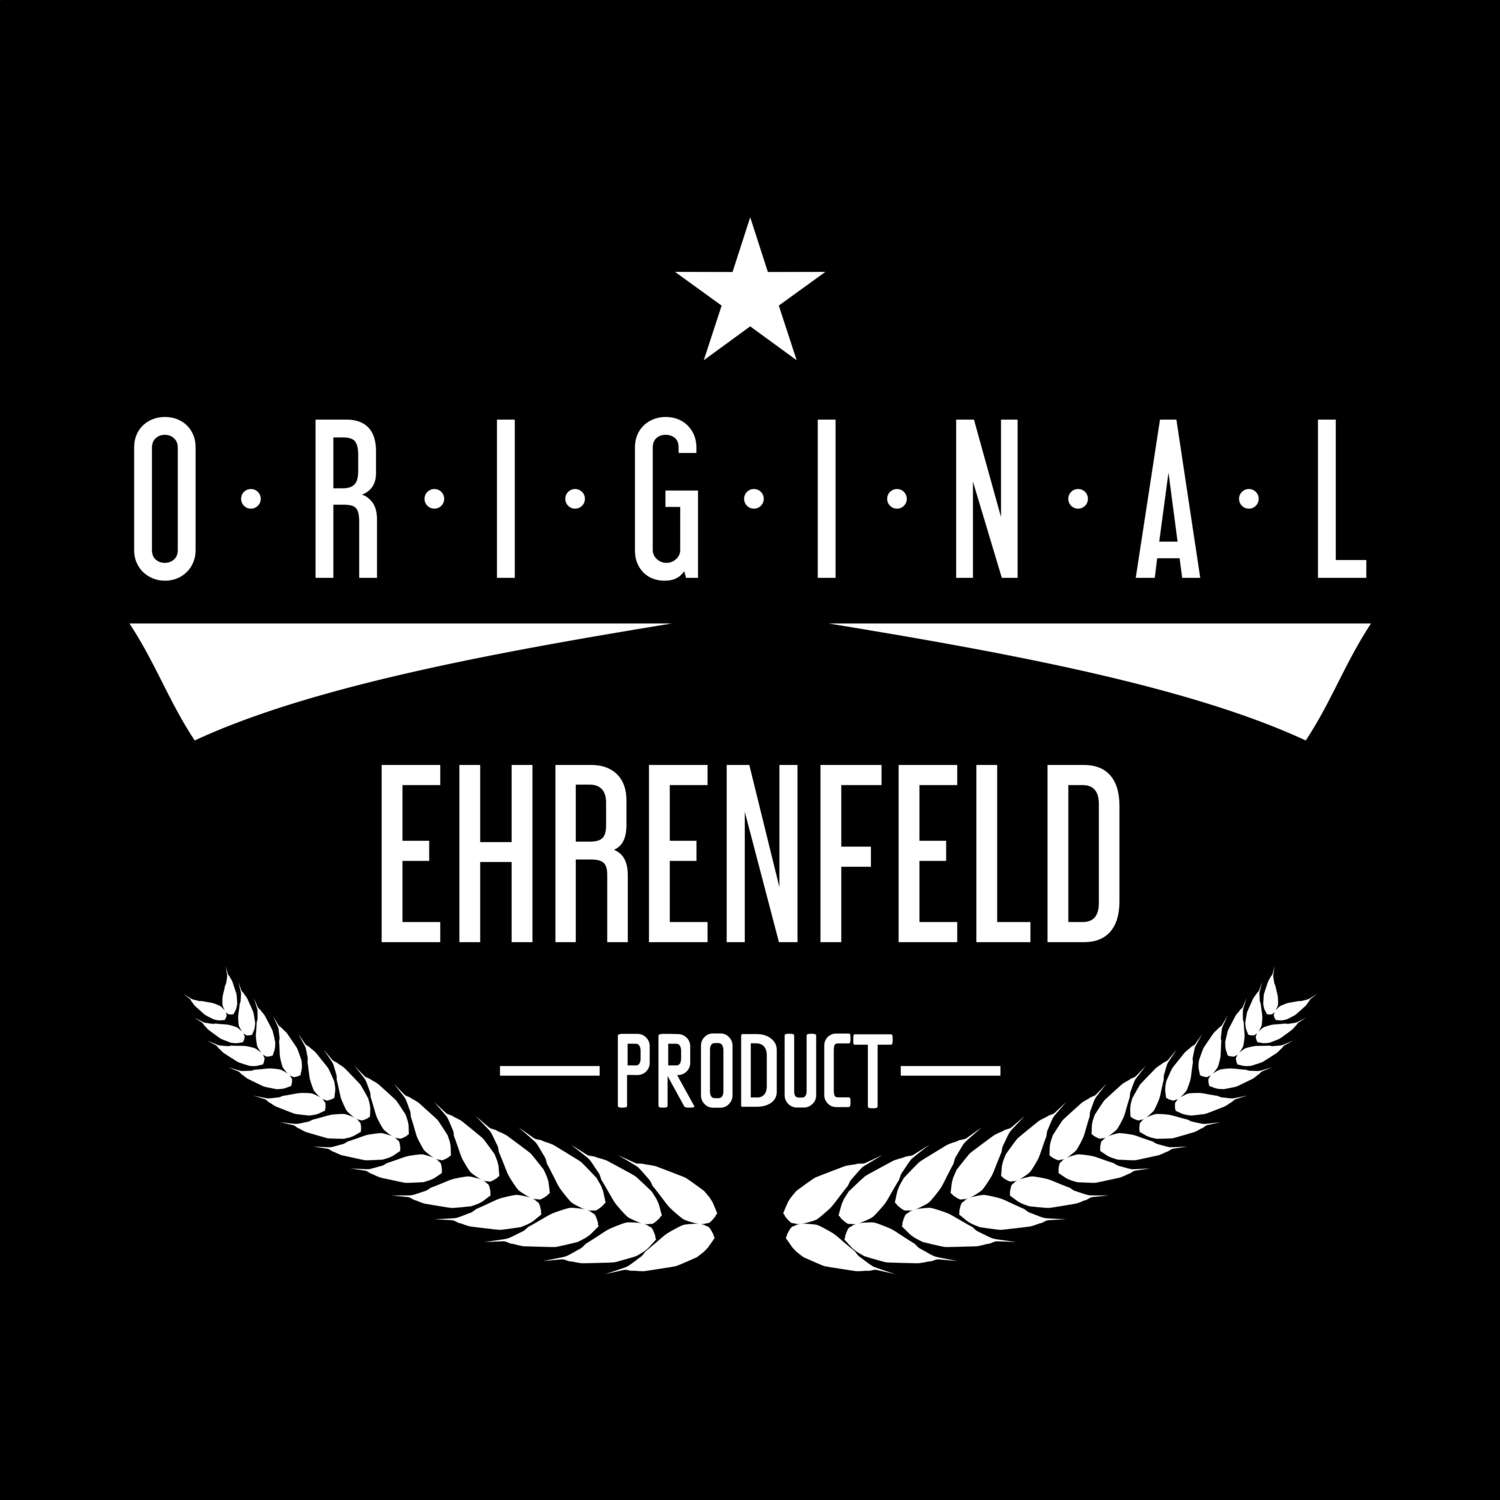 Ehrenfeld T-Shirt »Original Product«